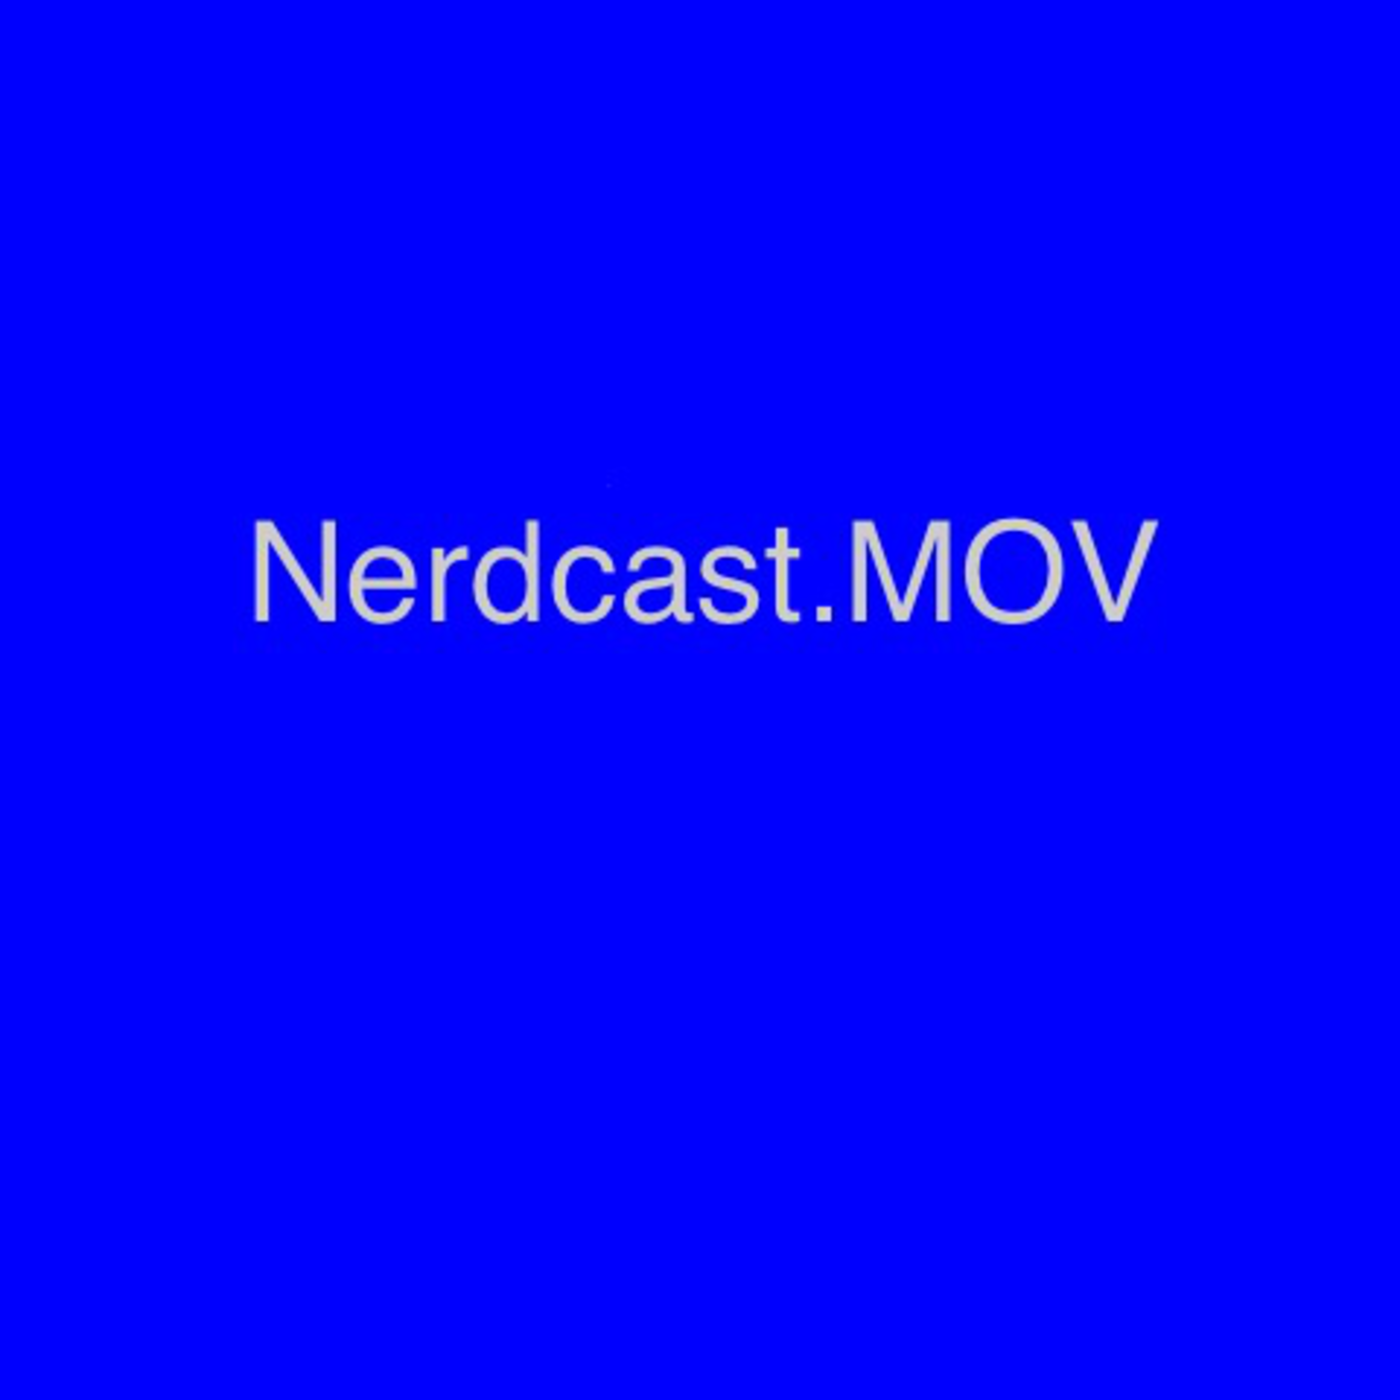 Nerdcast.MOV